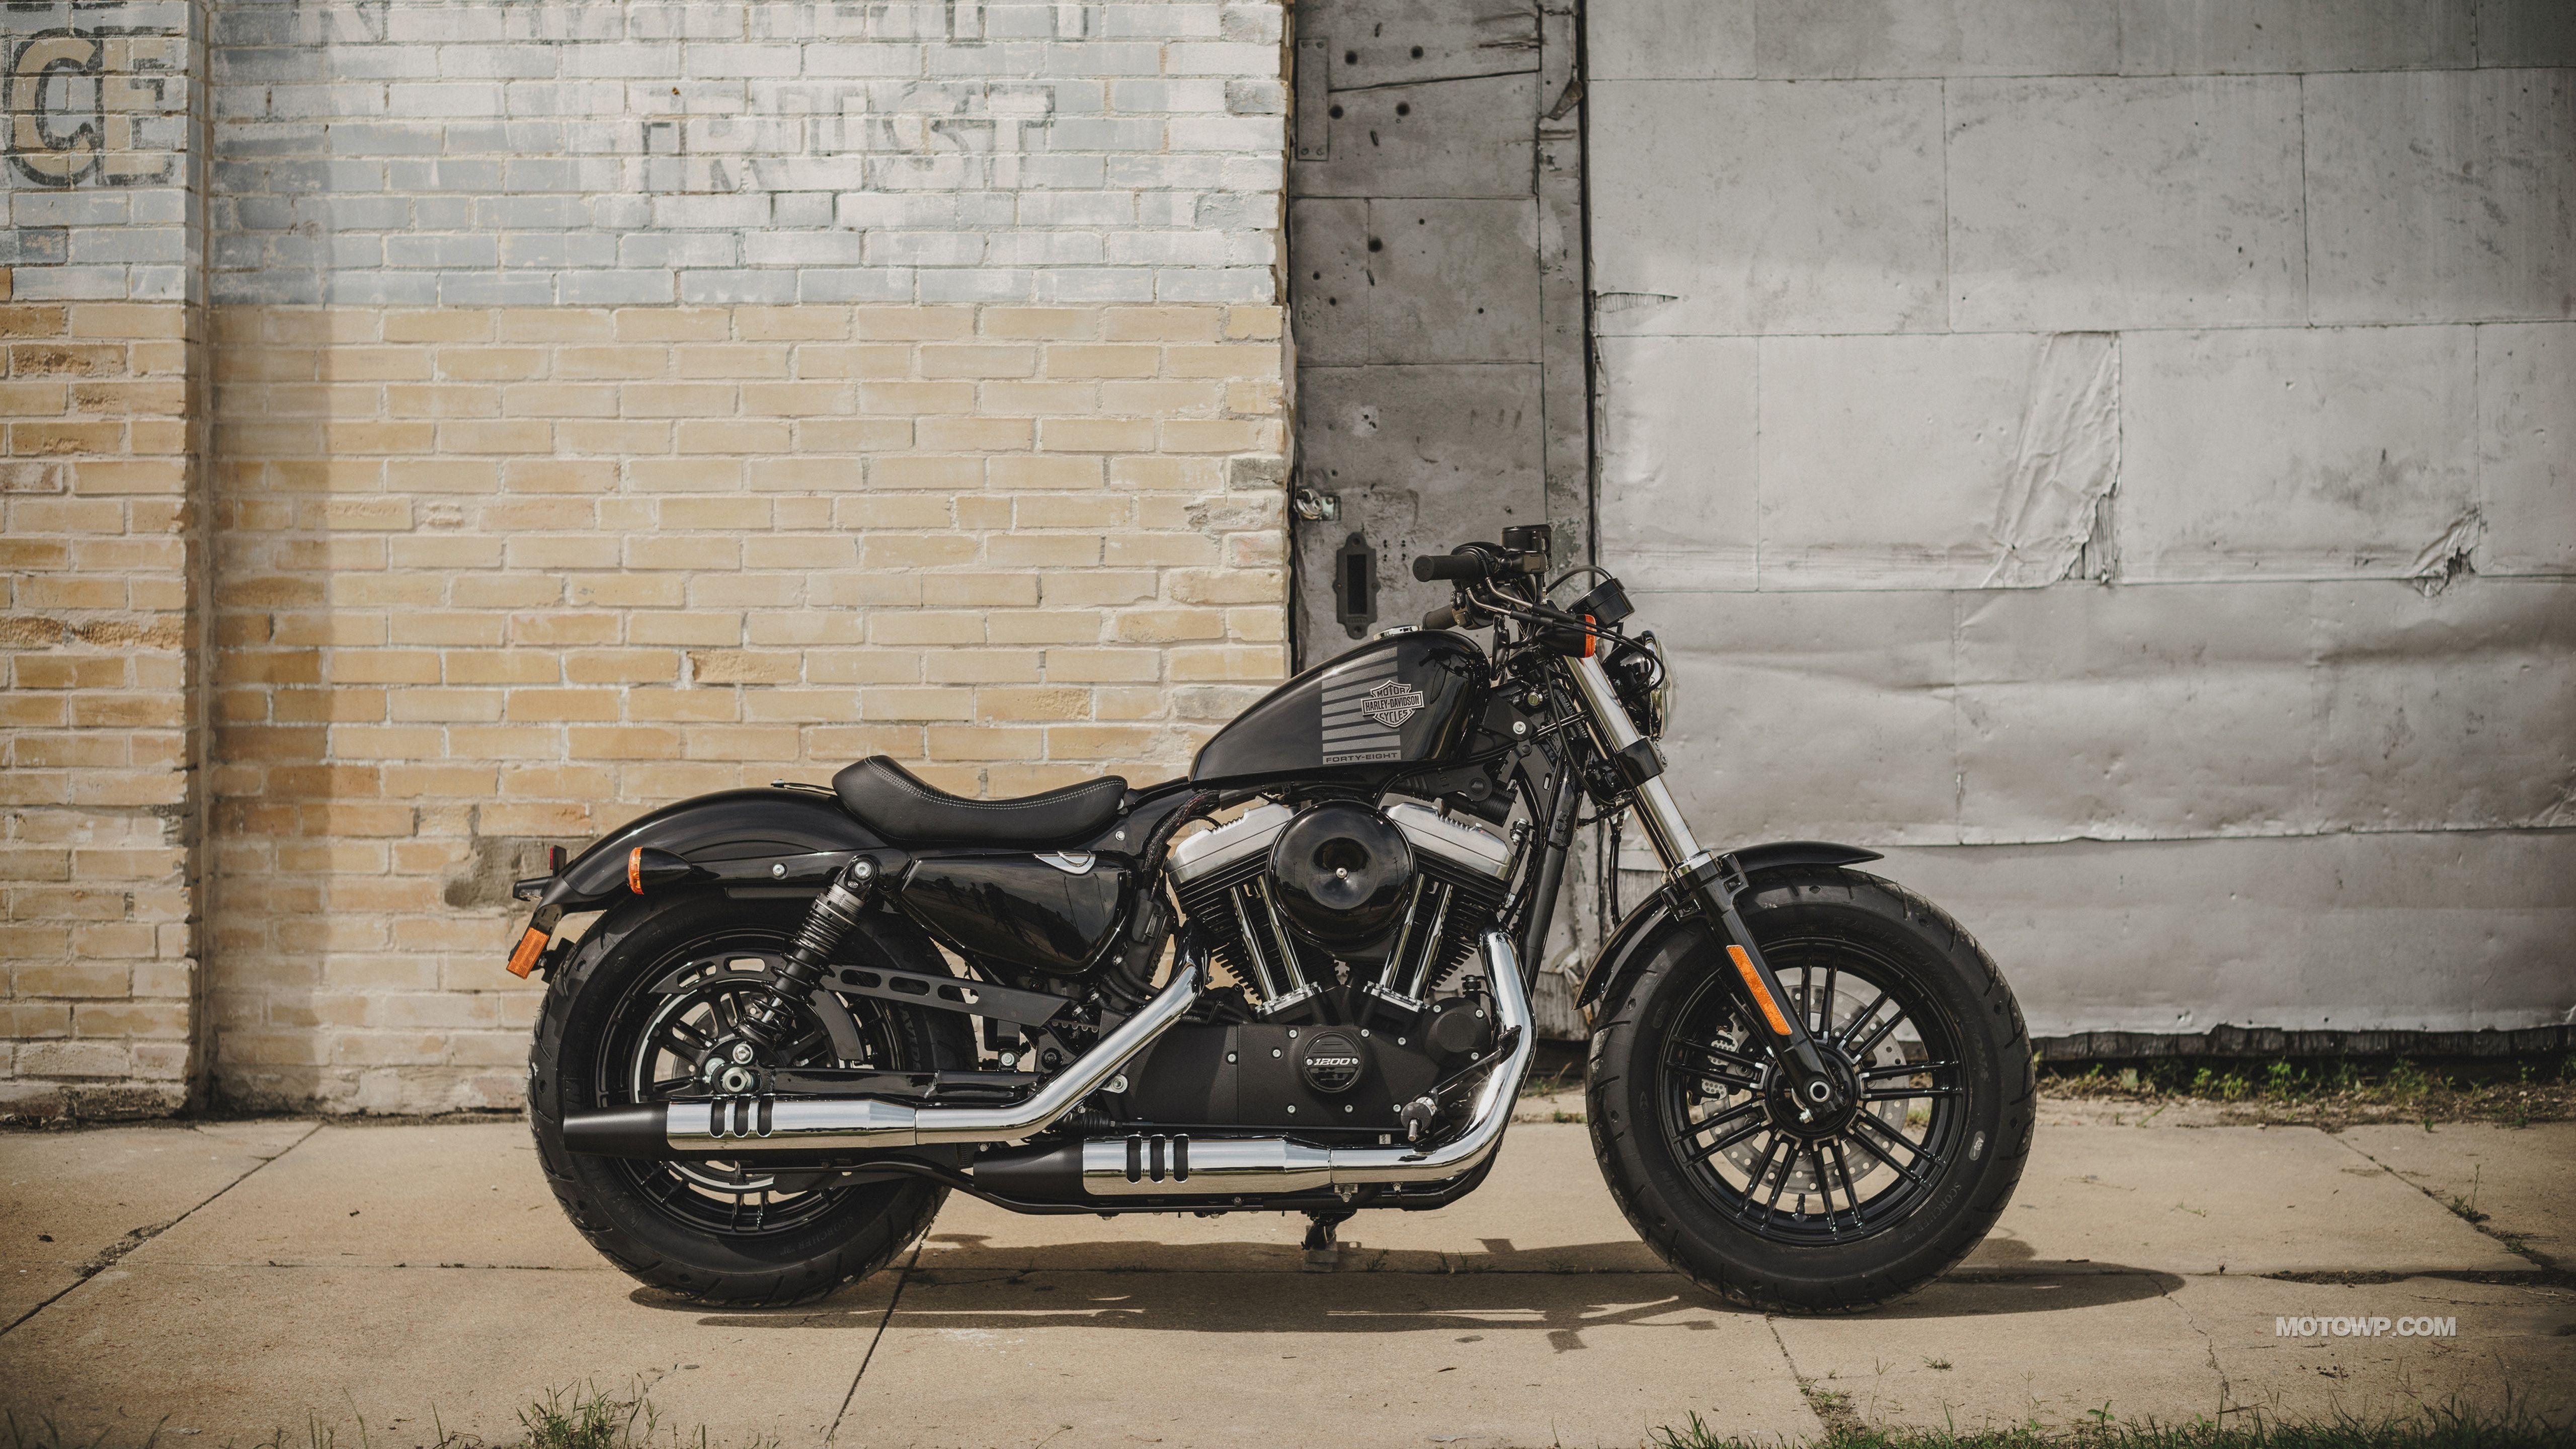 Harley Davidson Wallpapers HD High Quality - PixelsTalk.Net